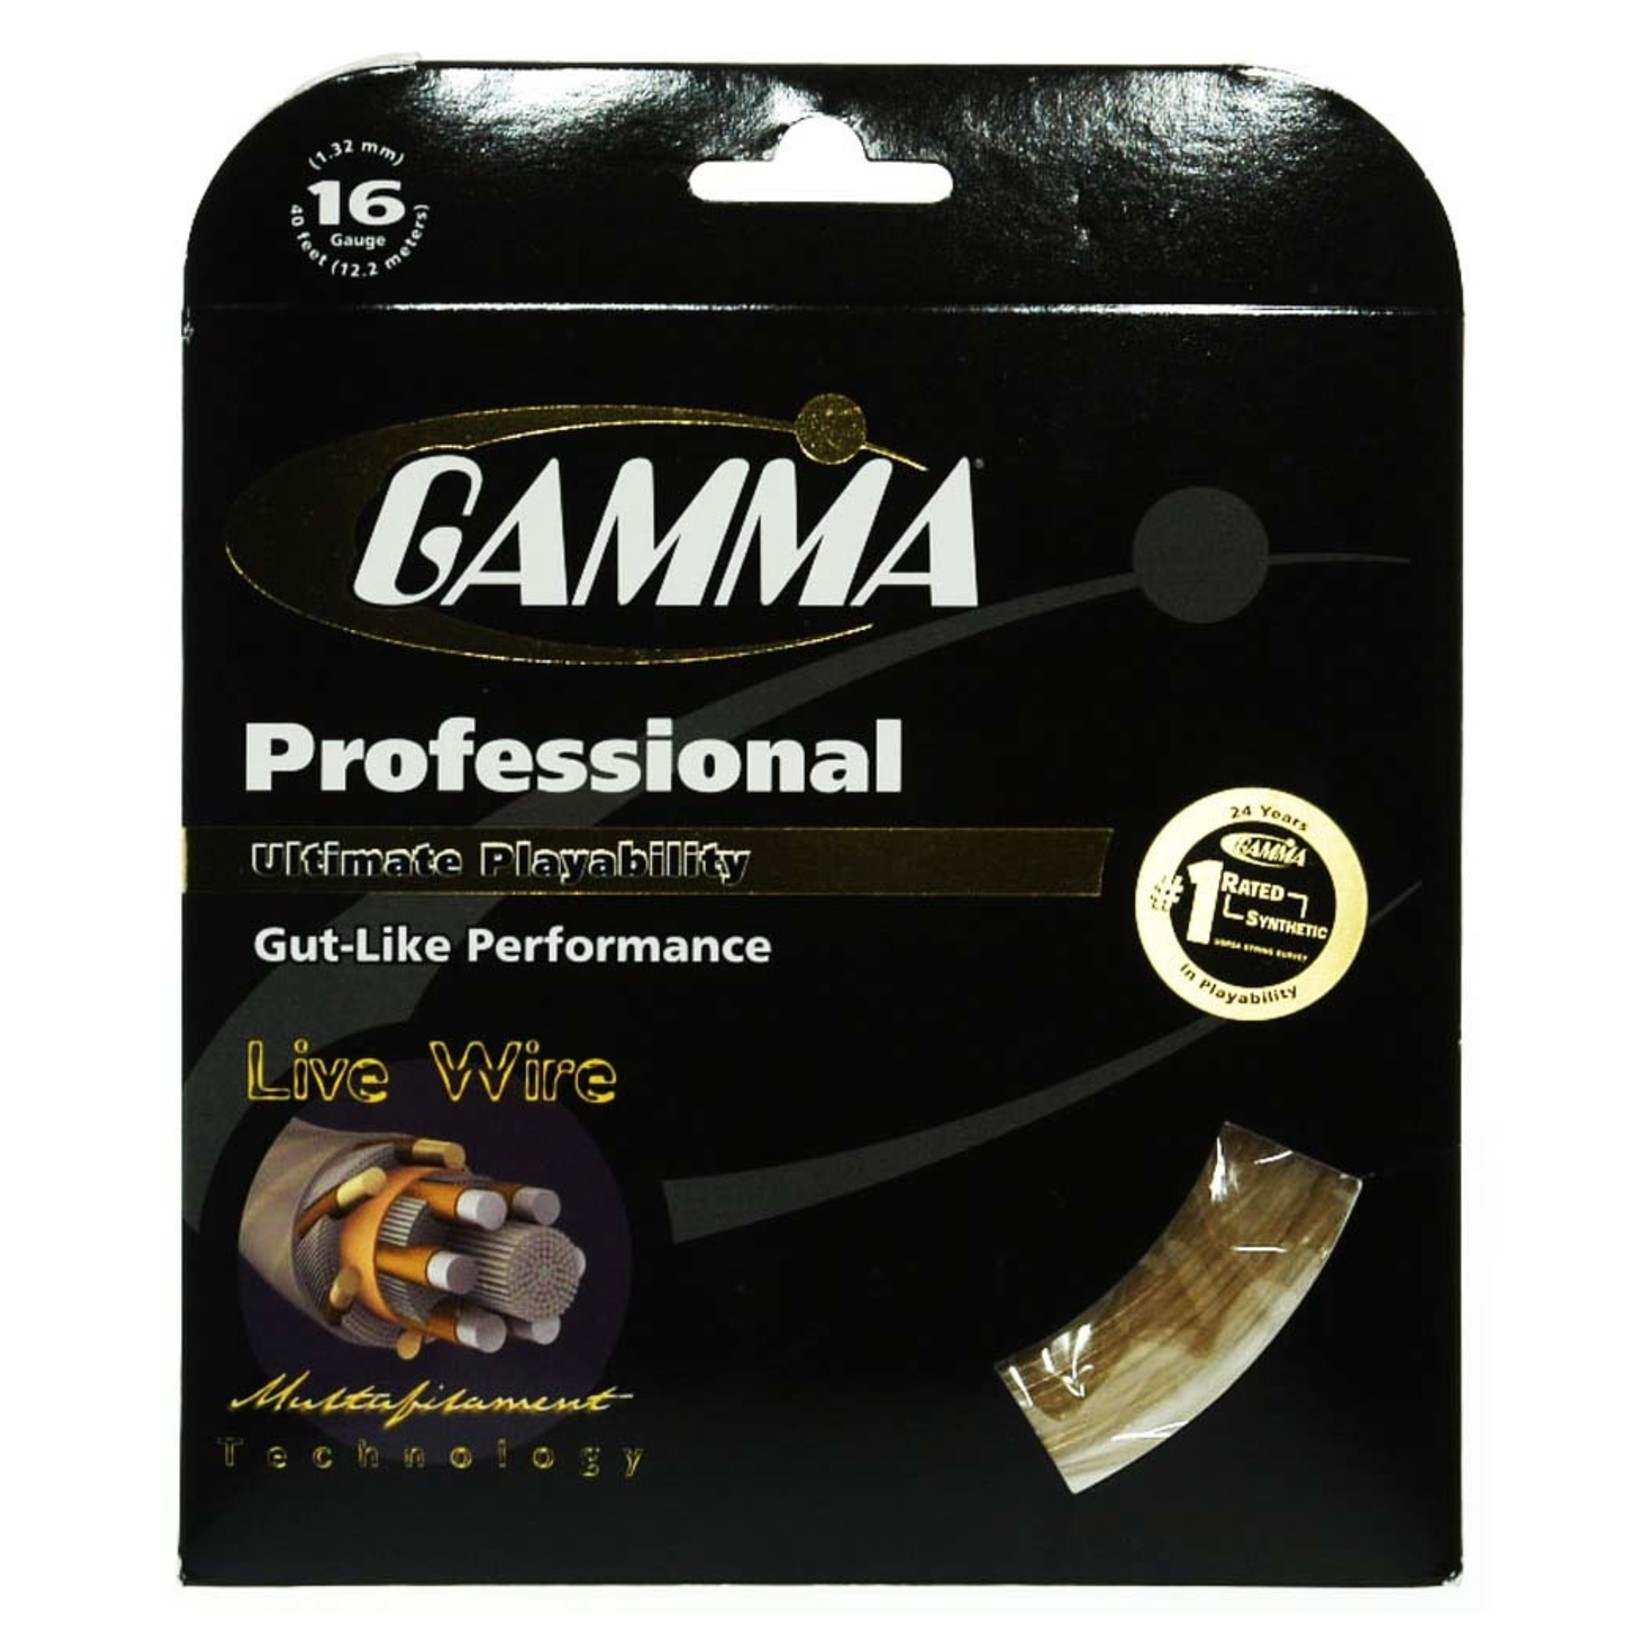 Gamma Gamma Live Wire Professional Tennis Strings